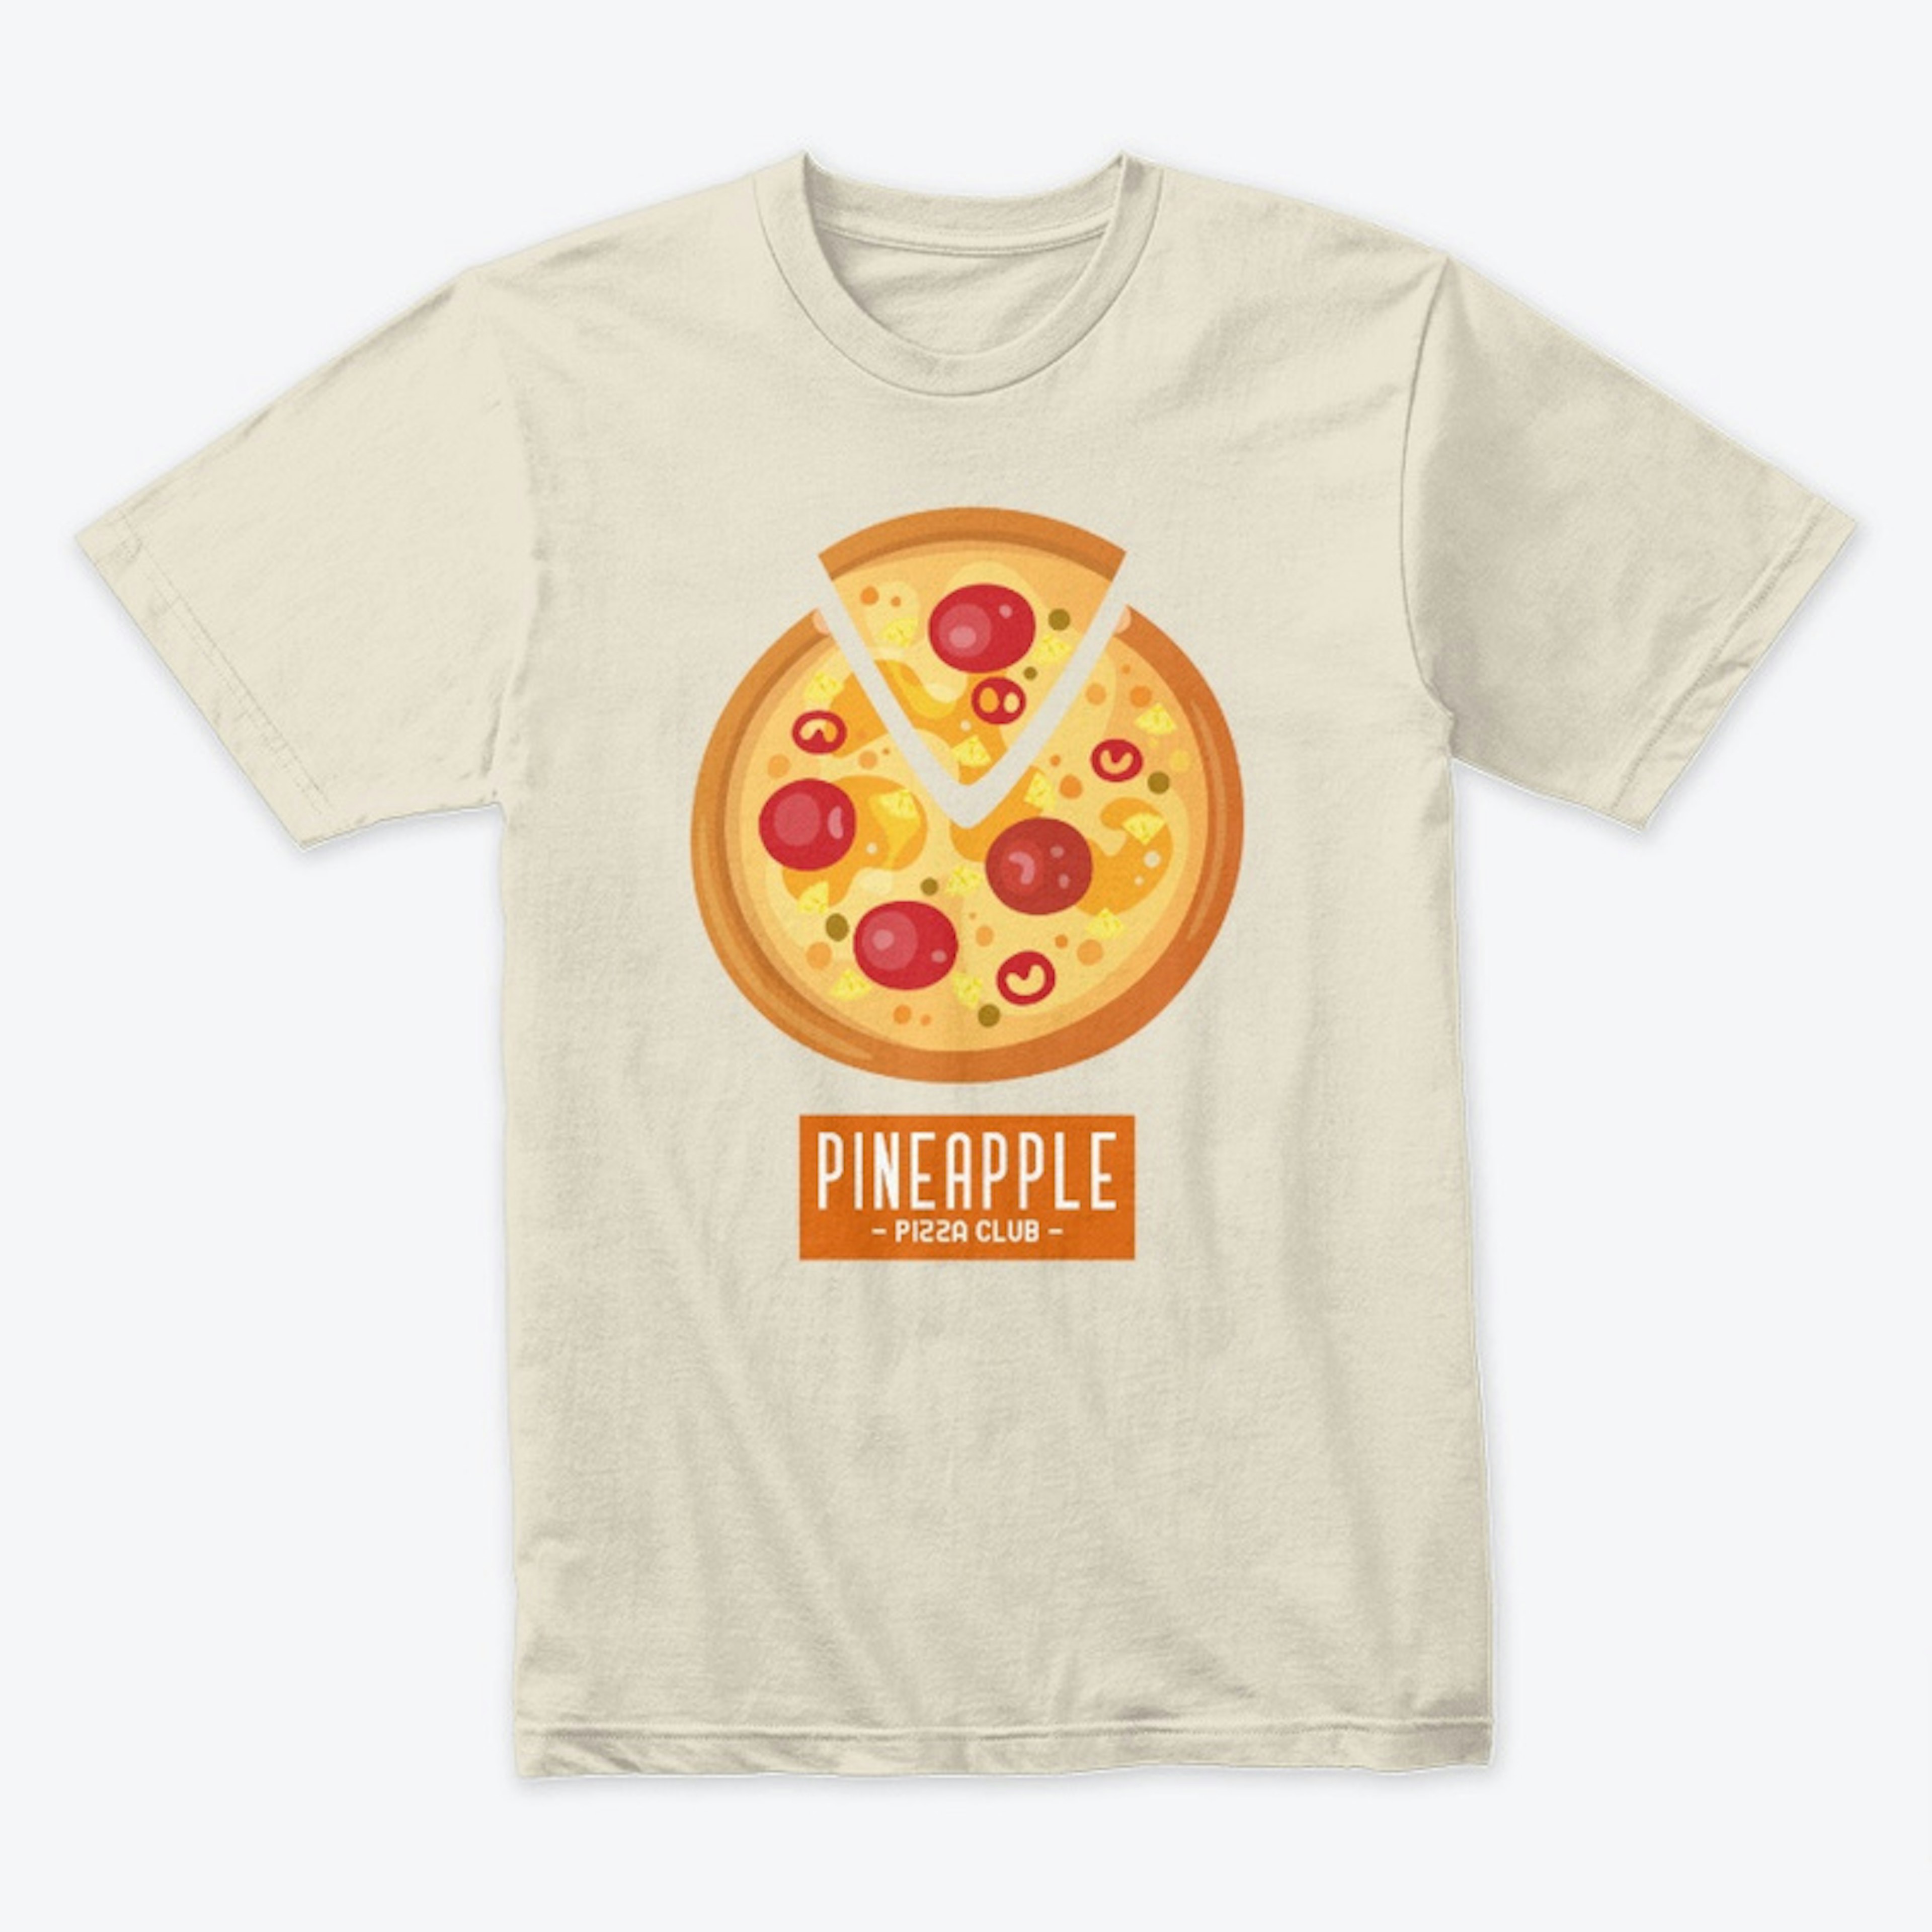 PINEAPPLE PIZZA CLUB